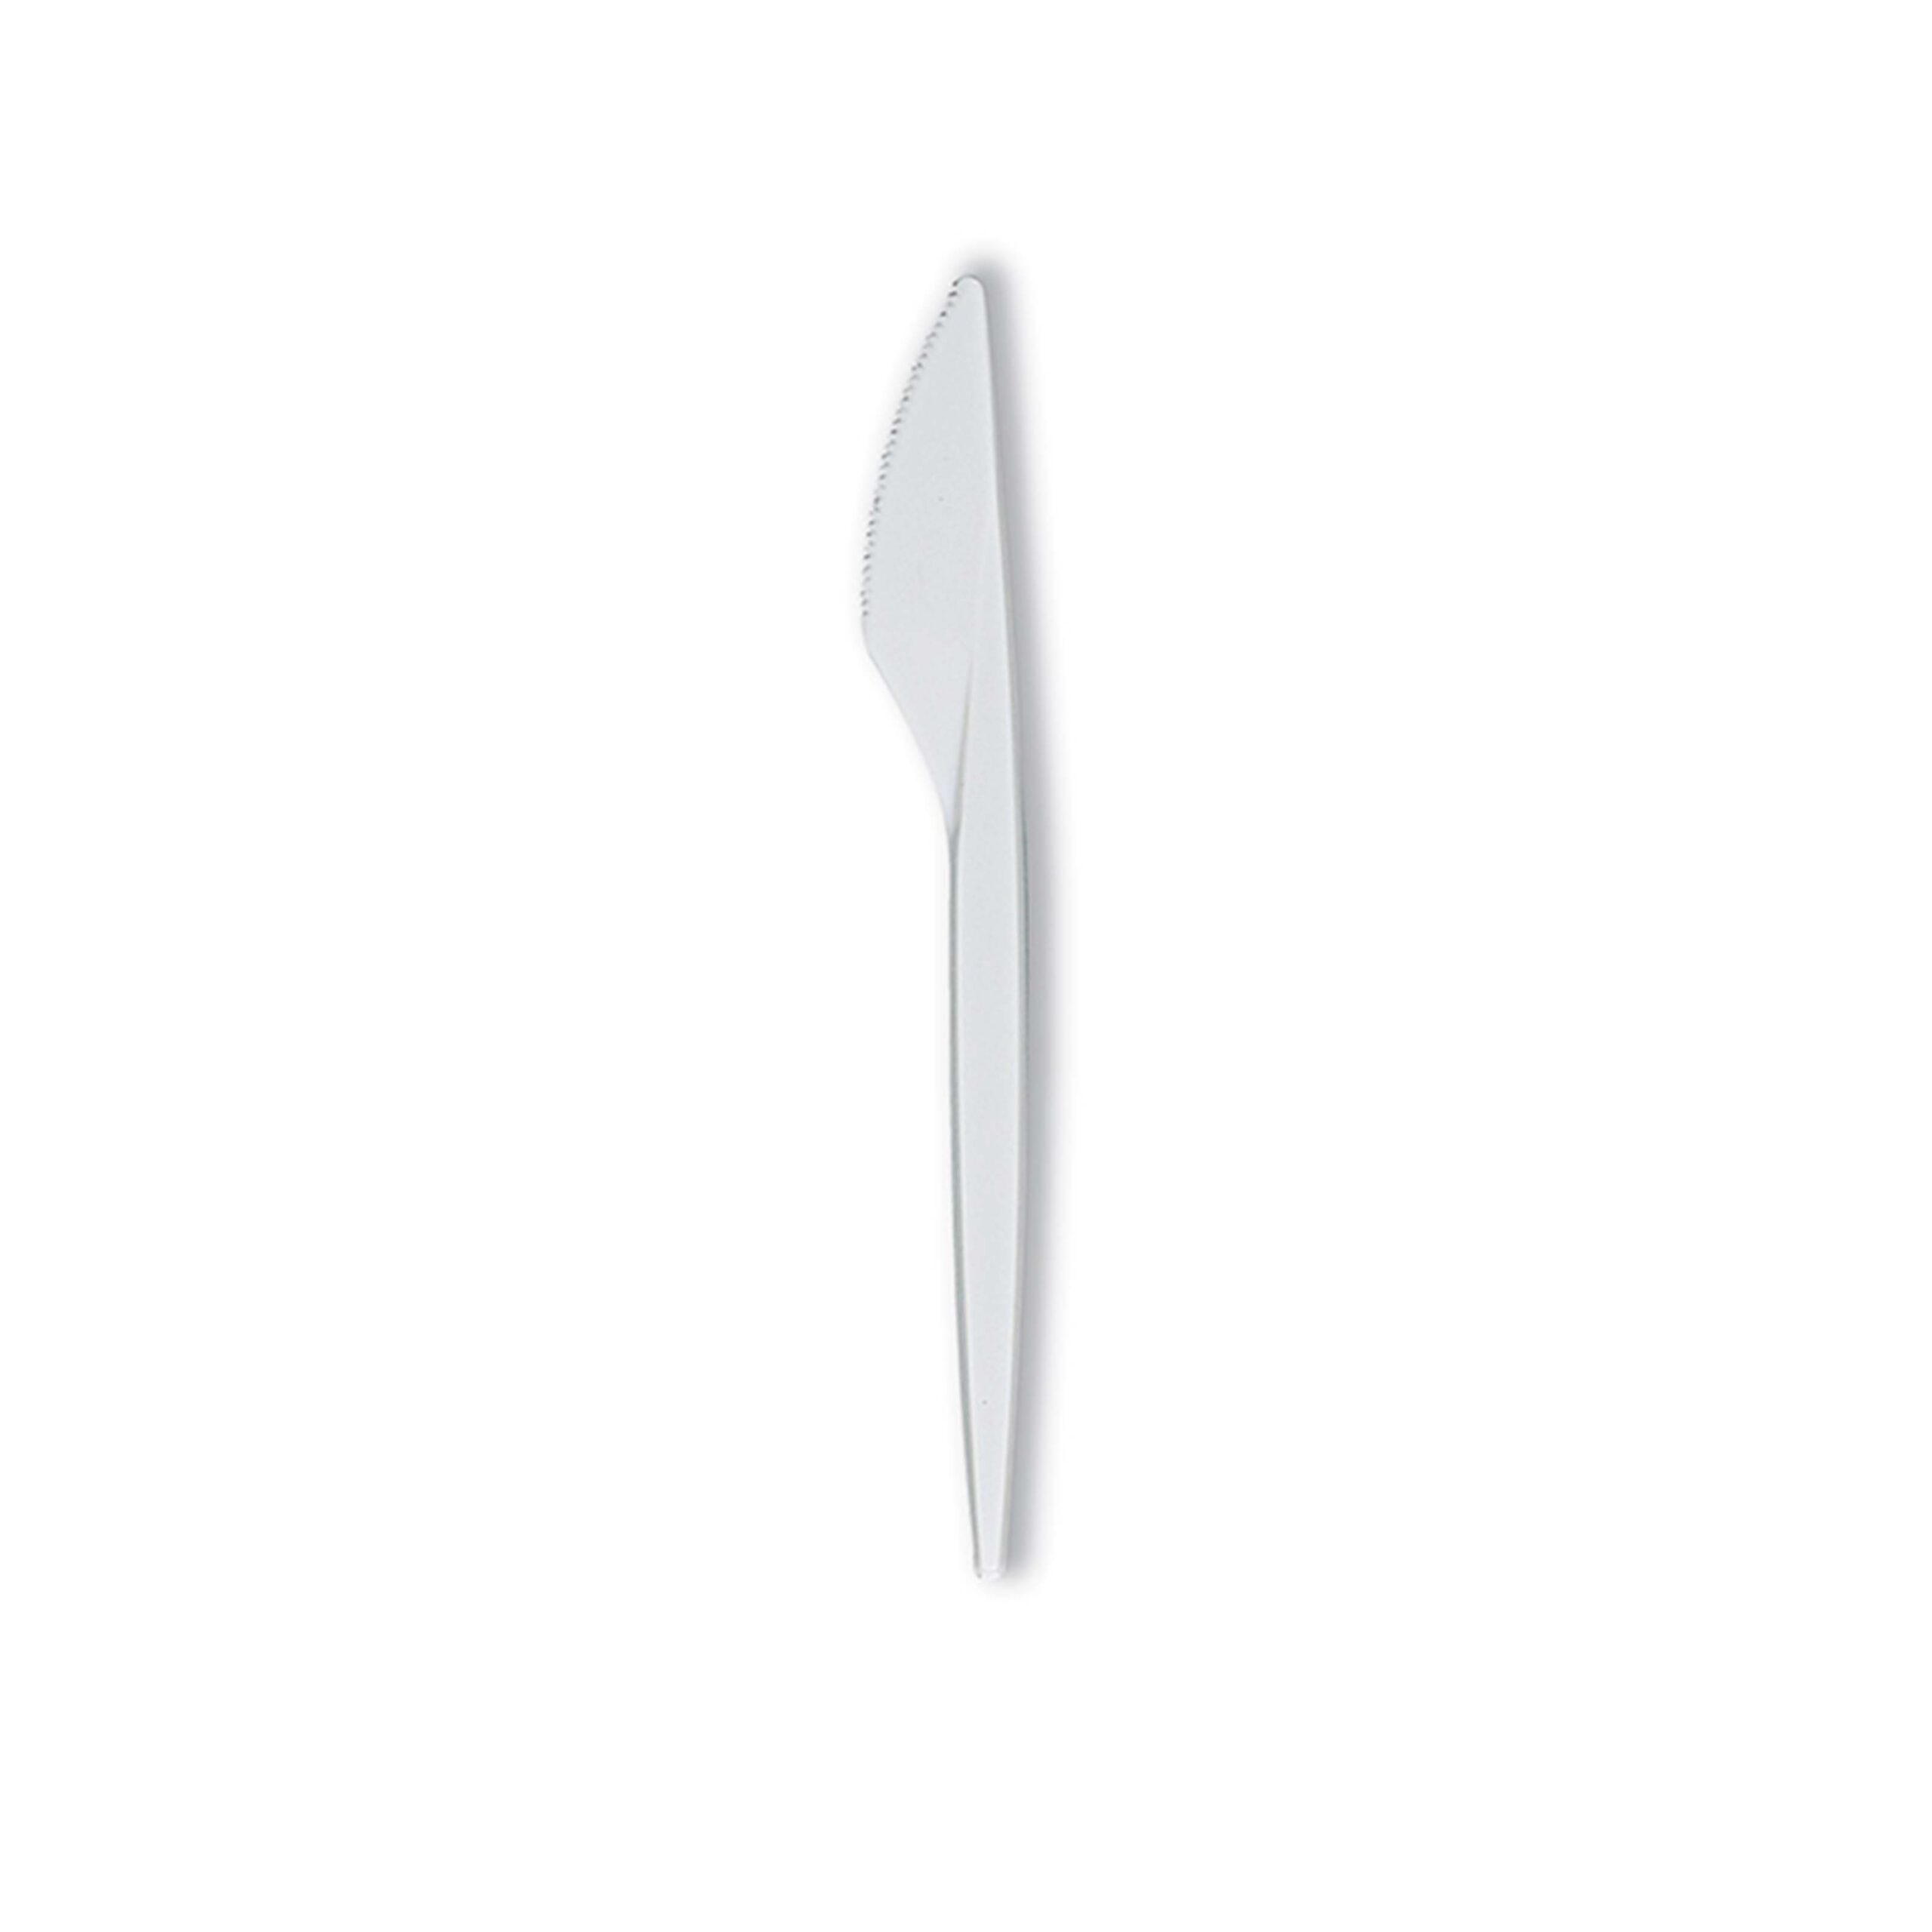 03. Plastic Knife 6.5 scaled